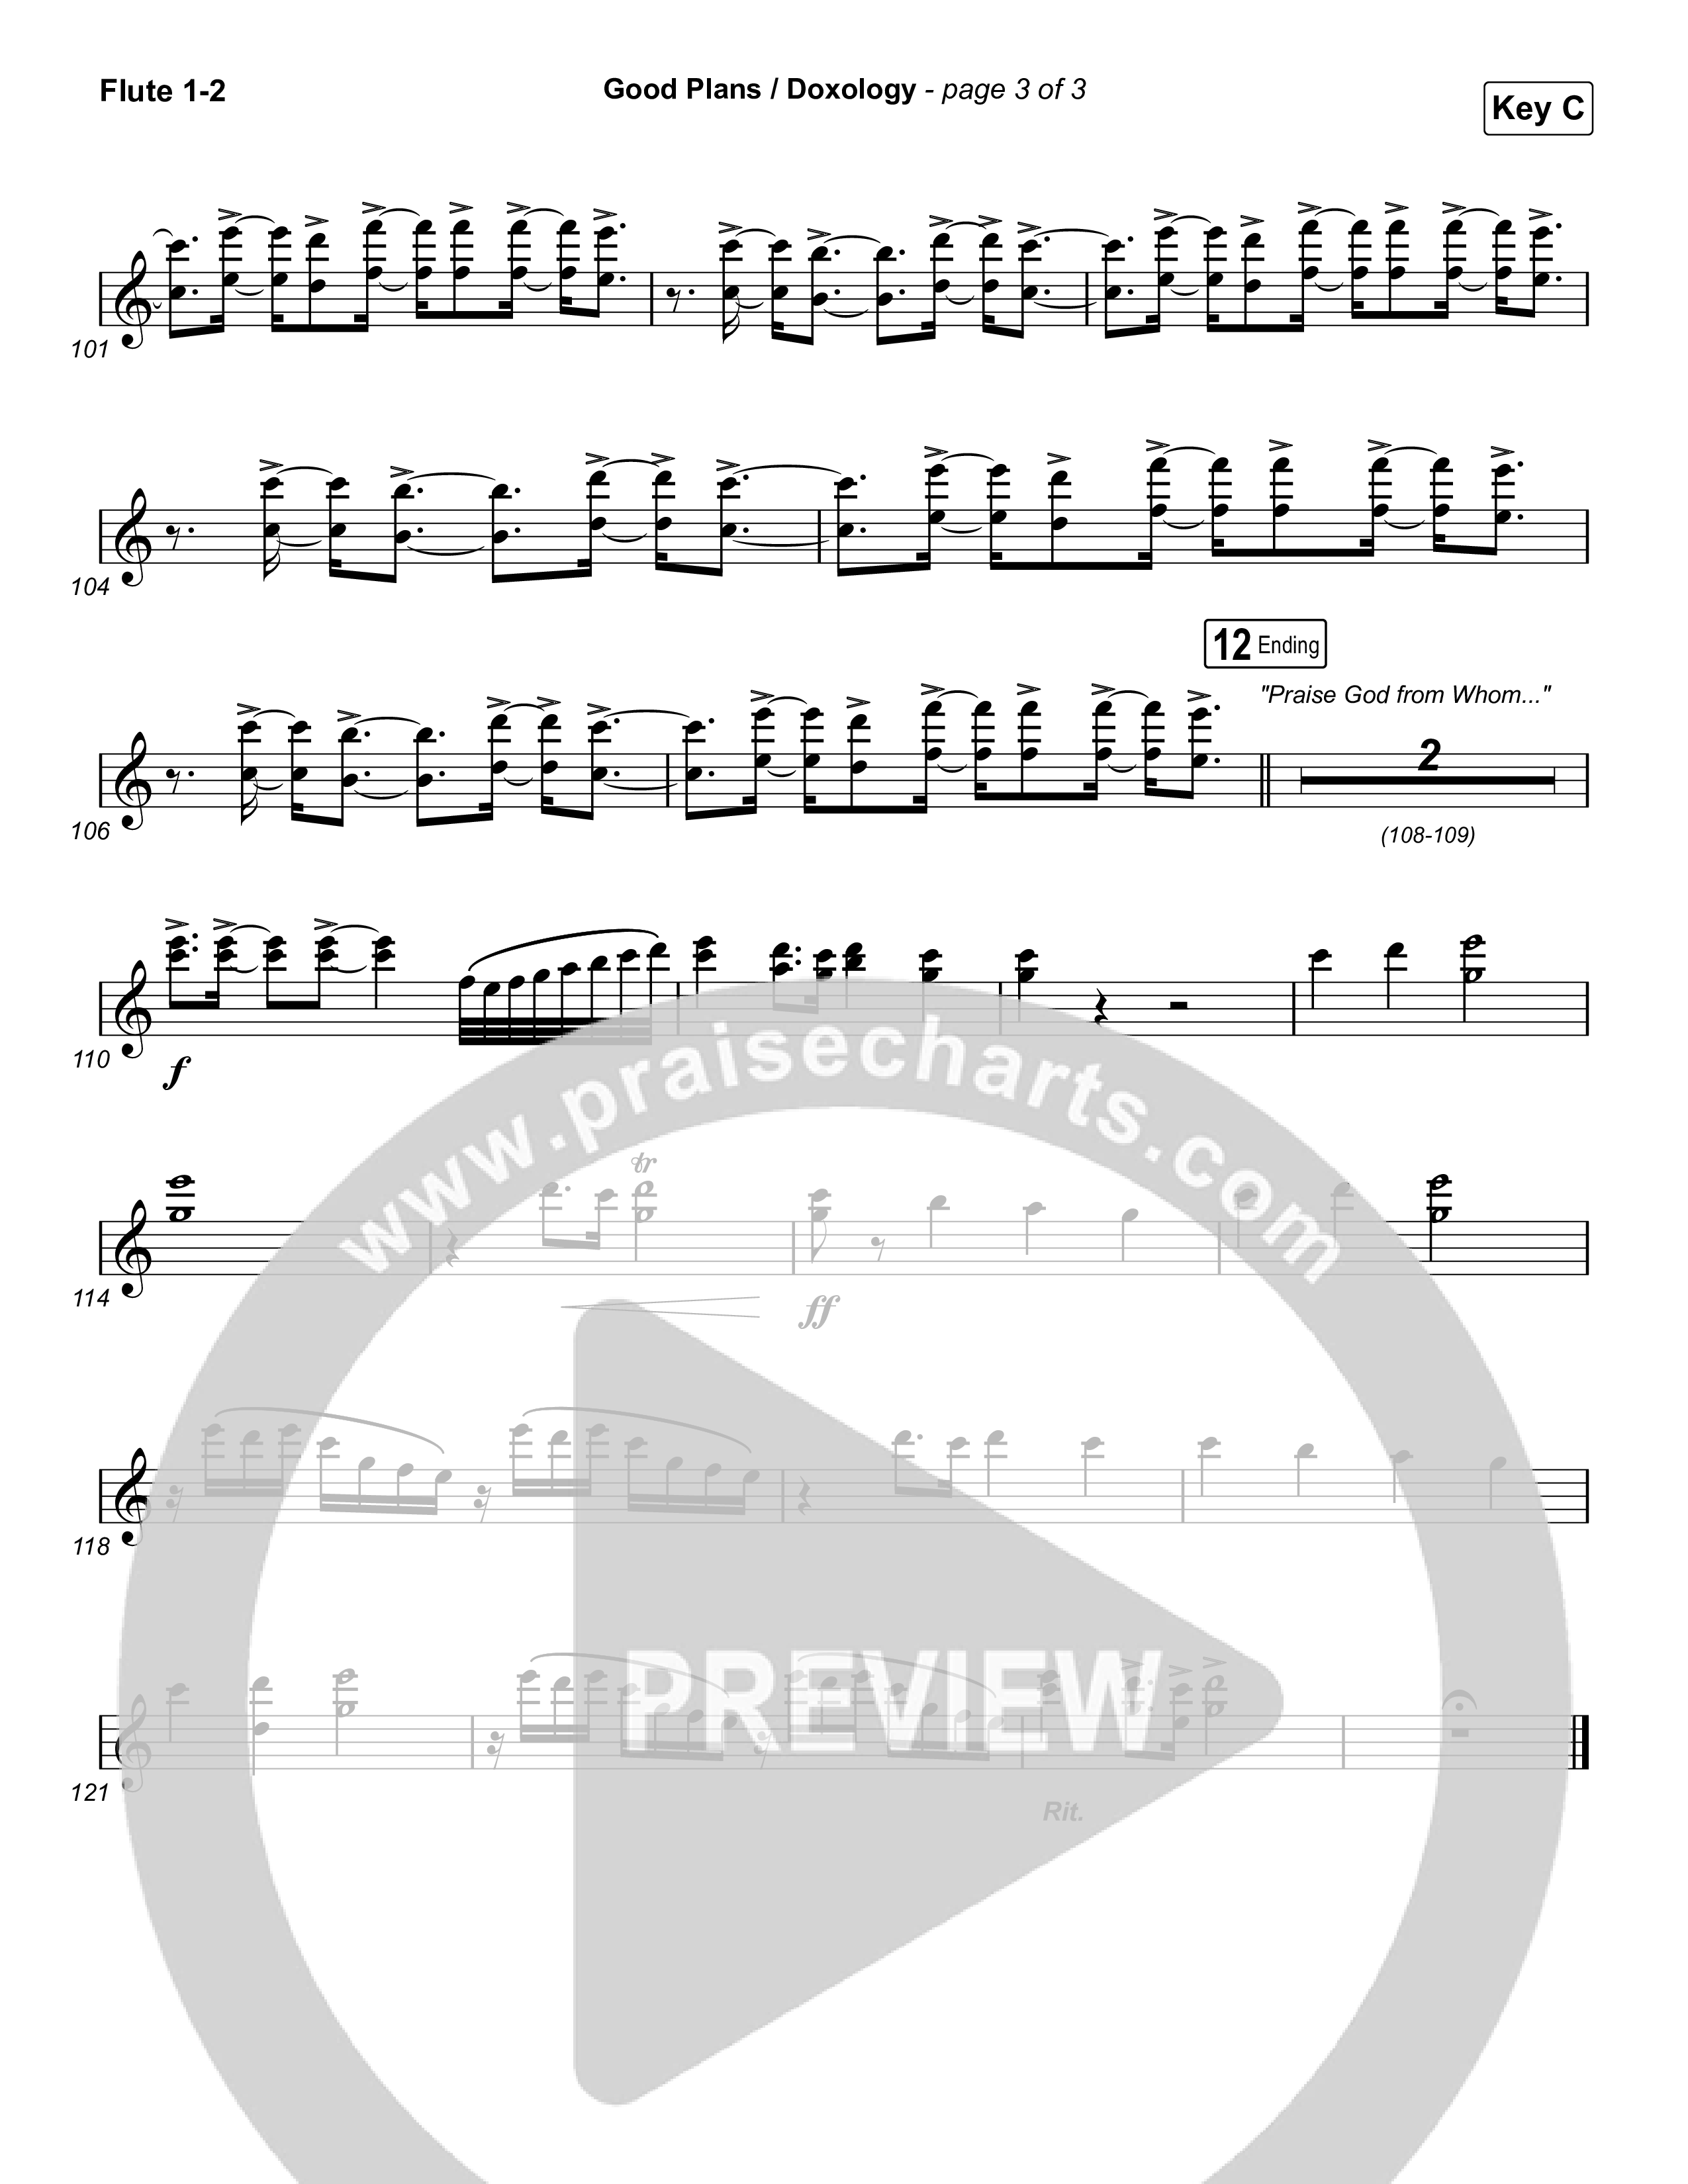 Good Plans/Doxology Flute 1,2 (Red Rocks Worship)